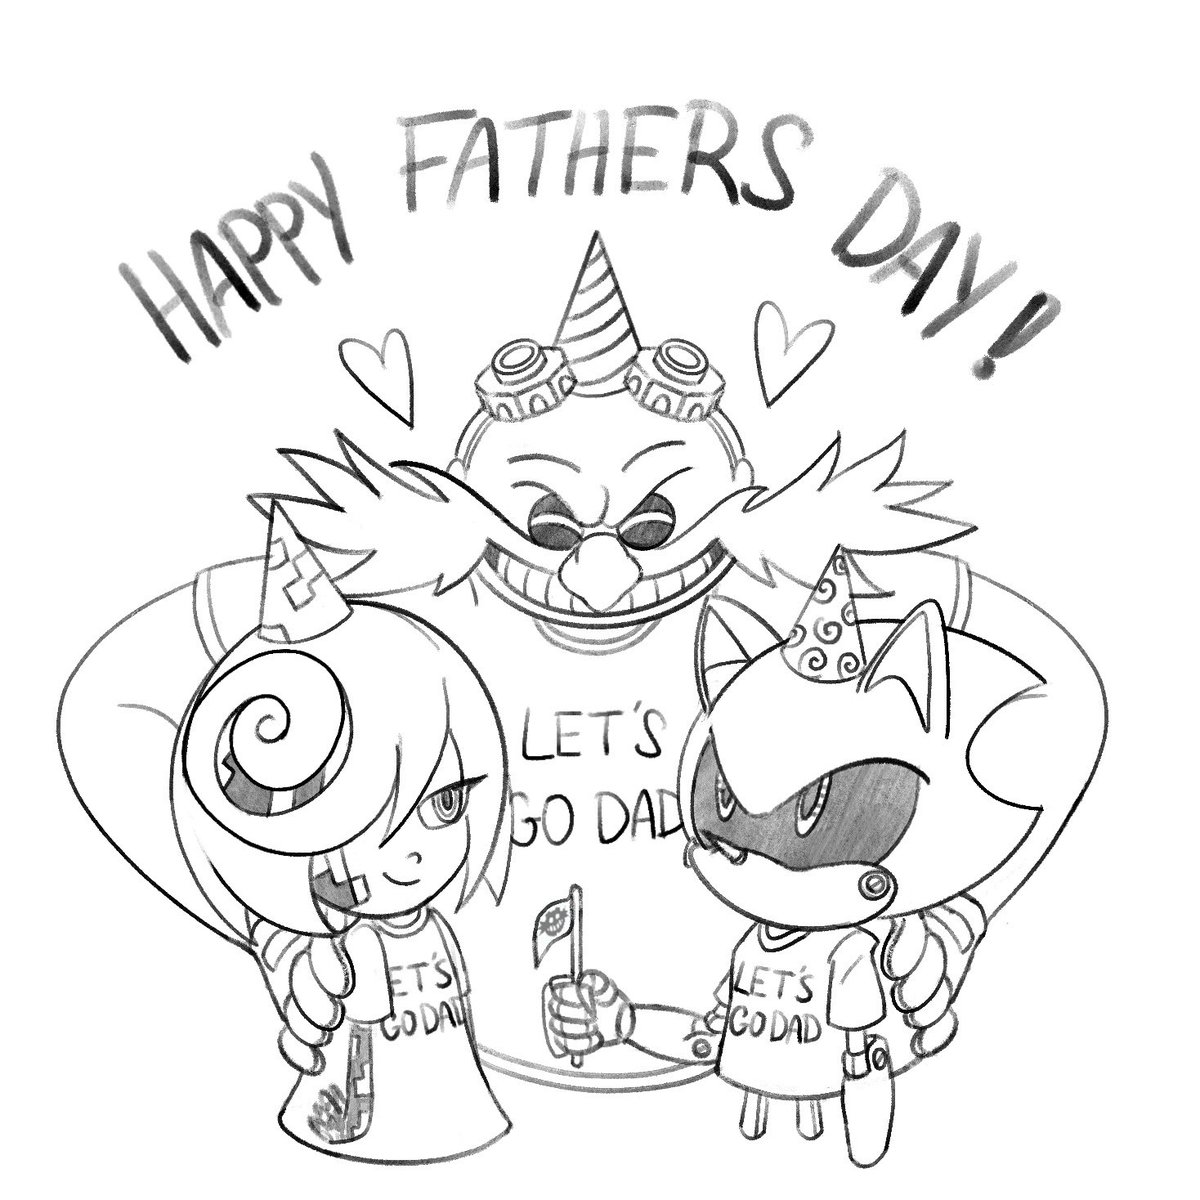 Happy Fathers Day!

#Eggman #MetalSonic #Sage #FatherDay #SonicFanart